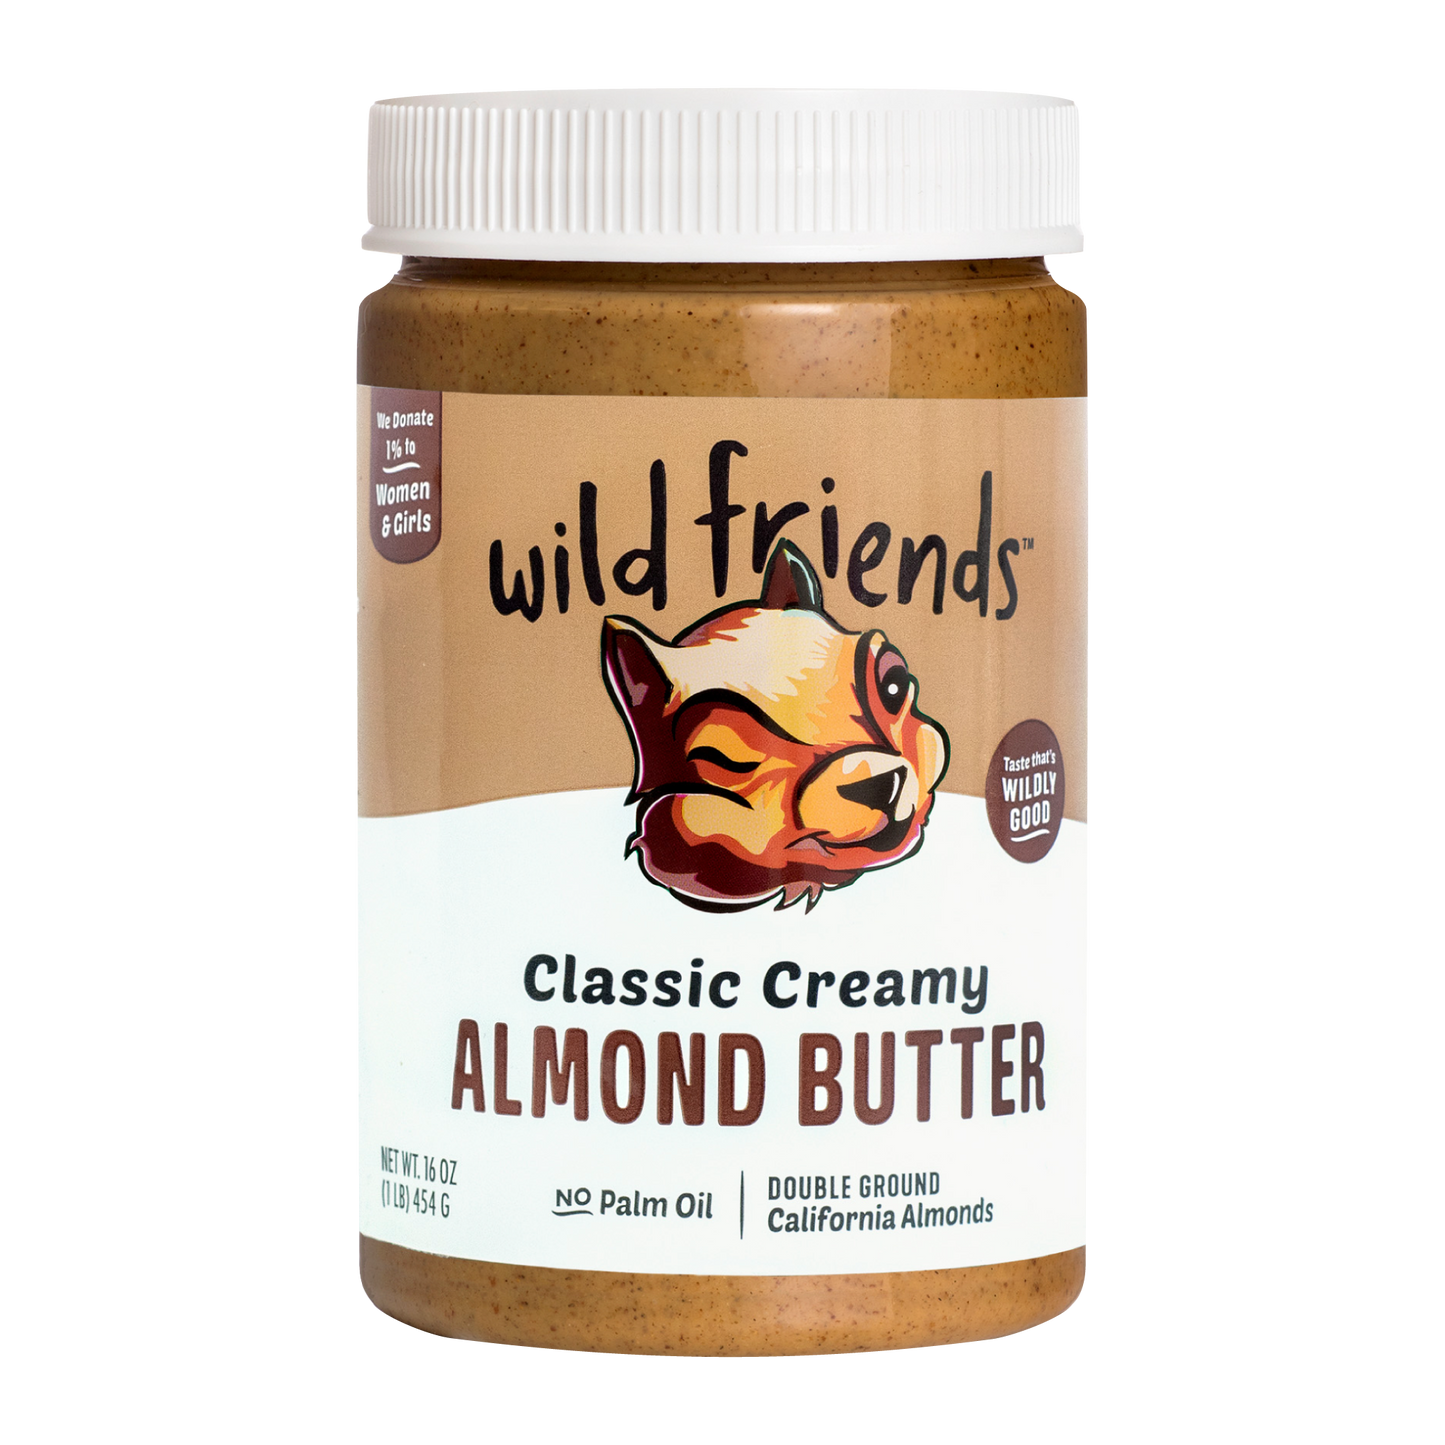 Classic Creamy Almond Butter